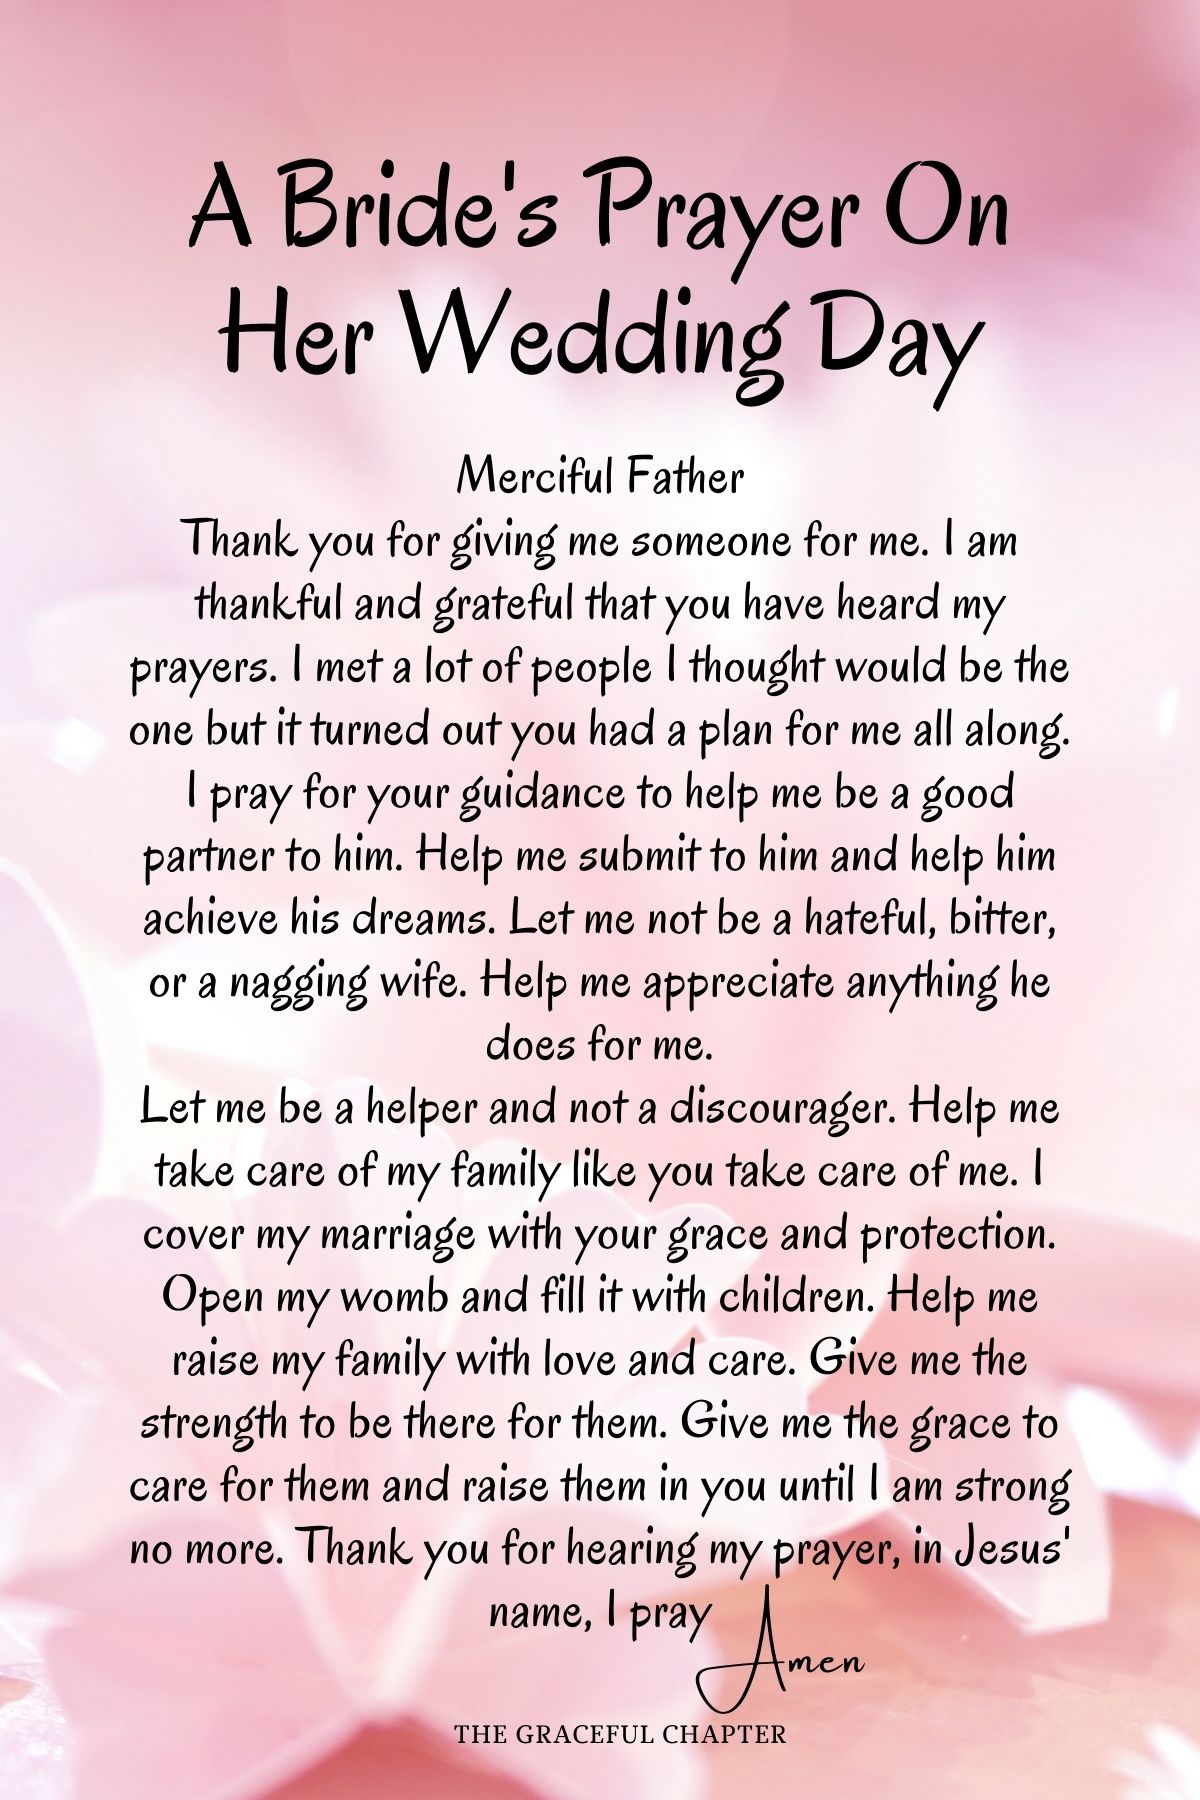 A bride's prayer on her wedding day